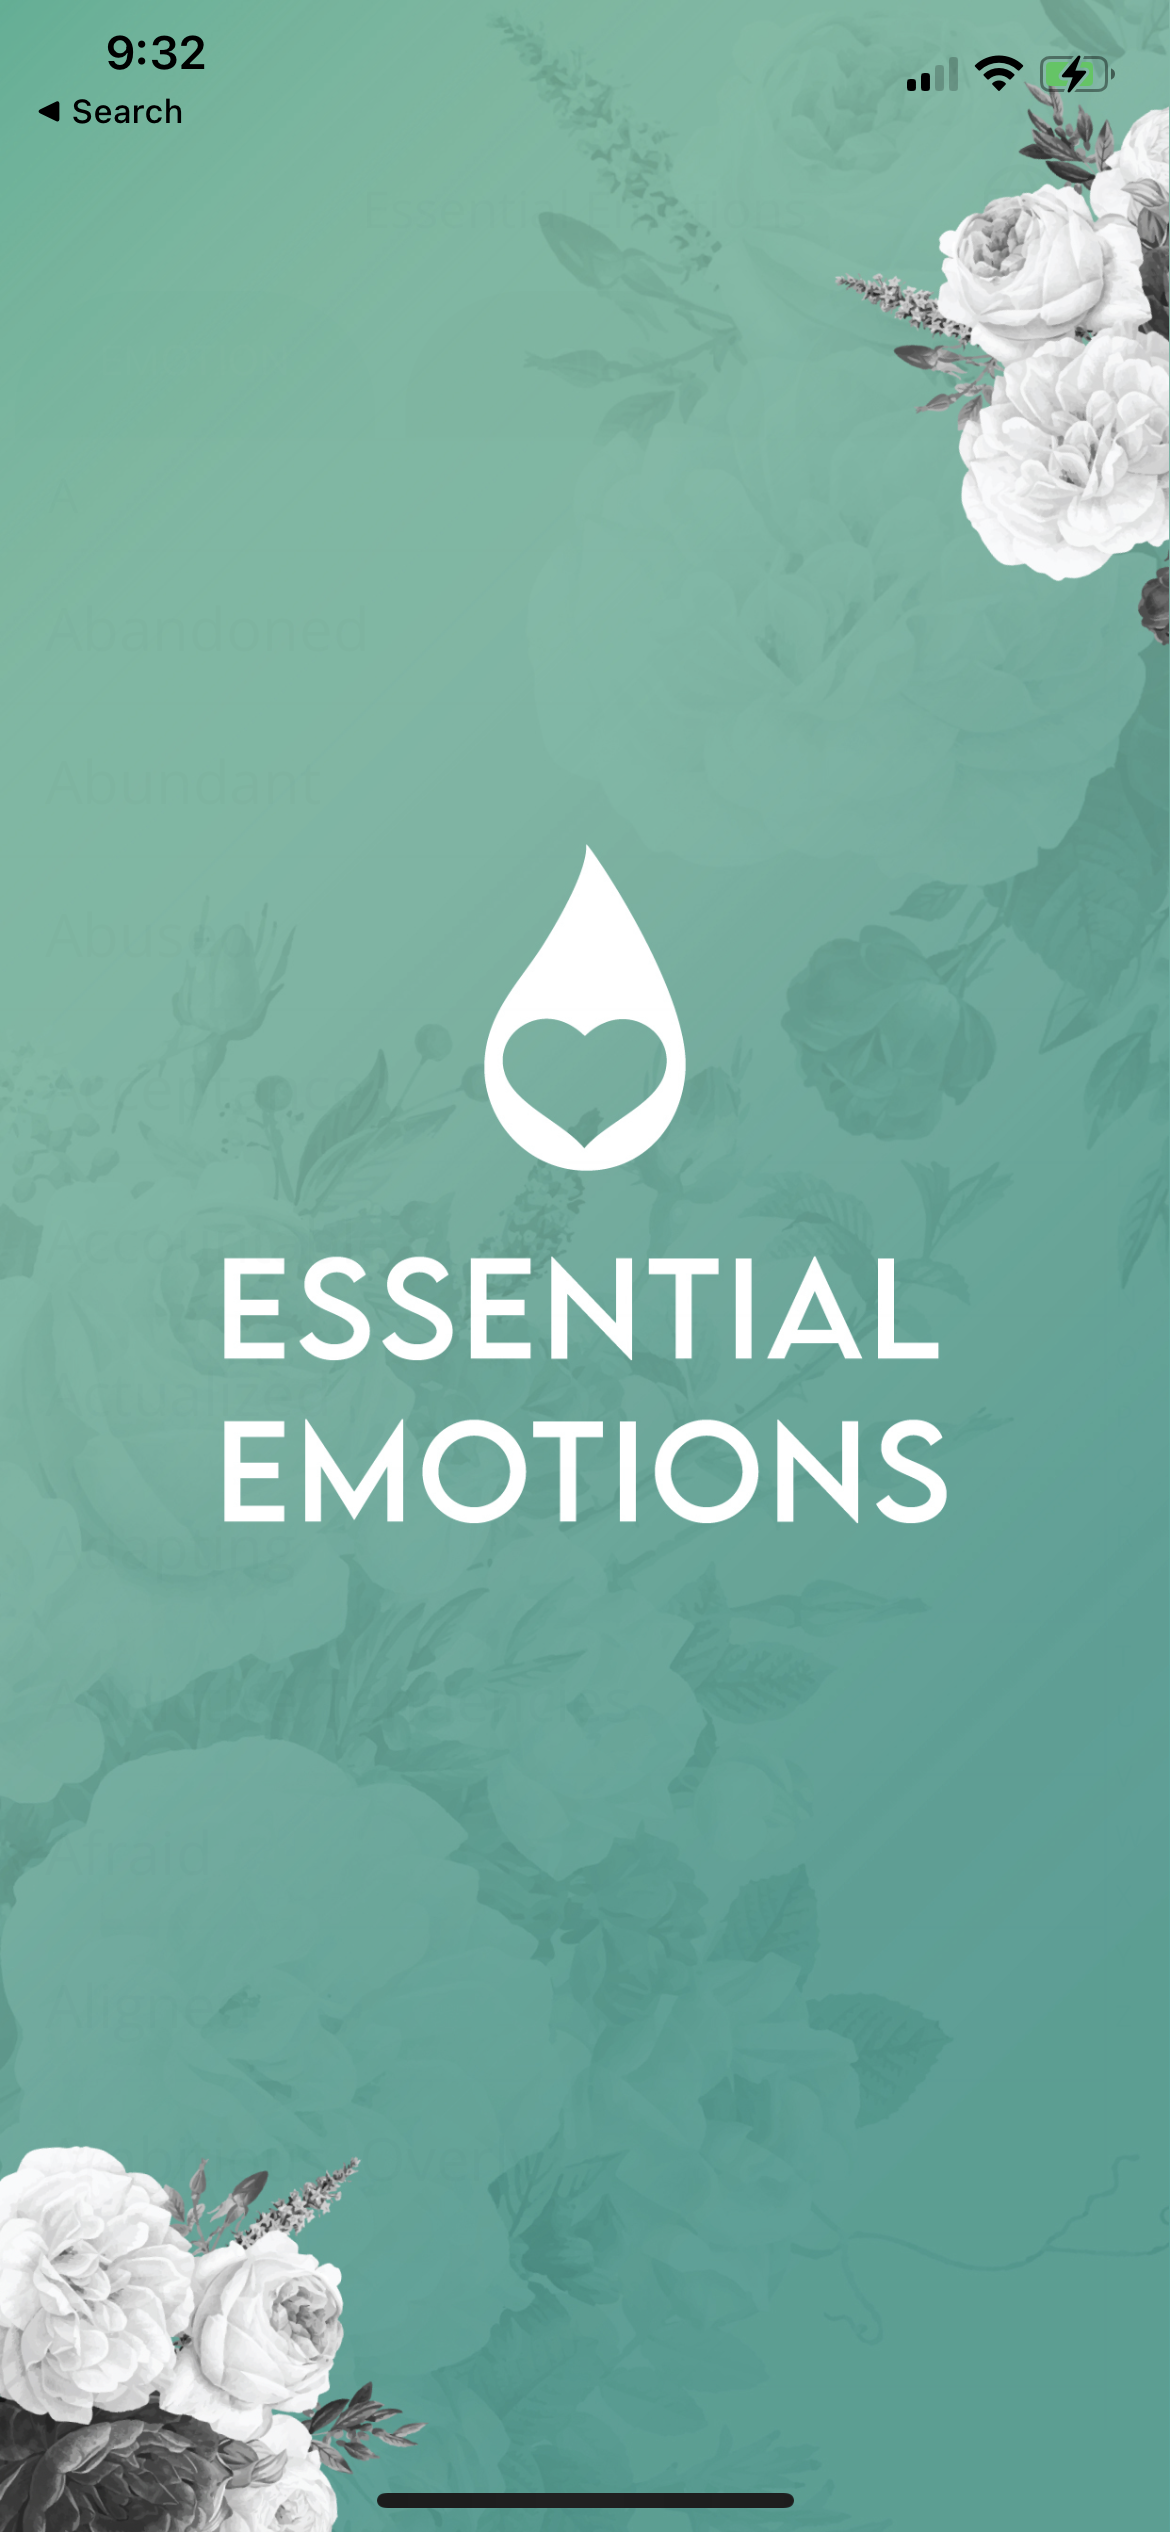 Essential Emotions App Subscription